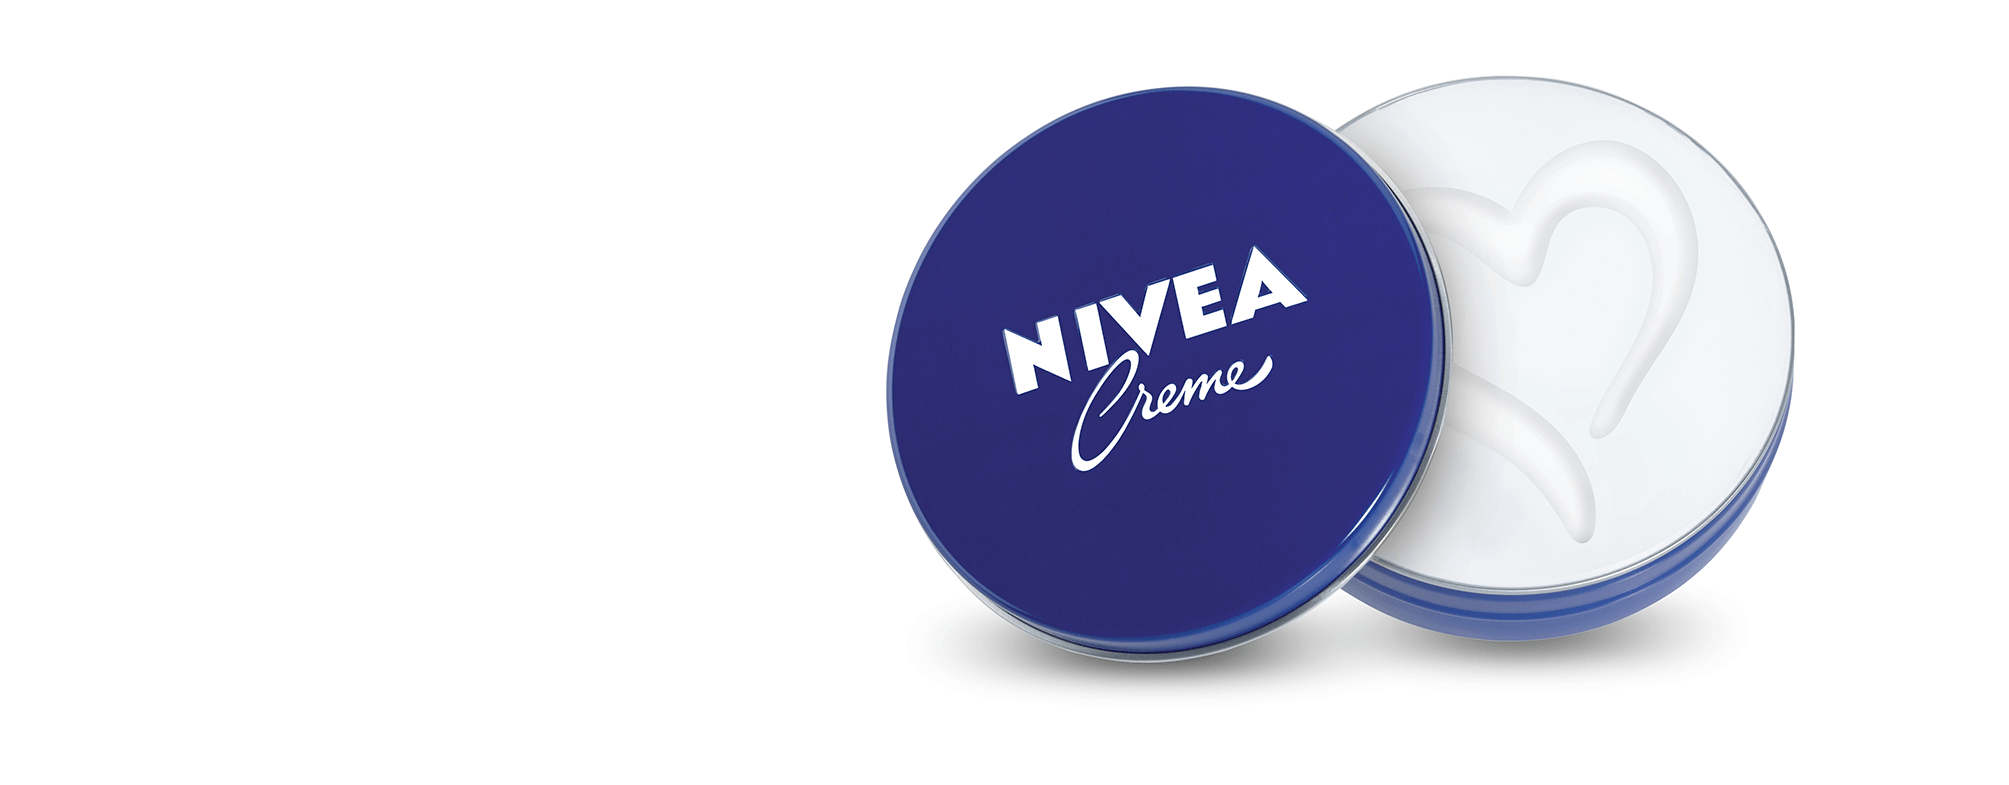 Nivea Logo - One Creme: Many Ways To Care – NIVEA